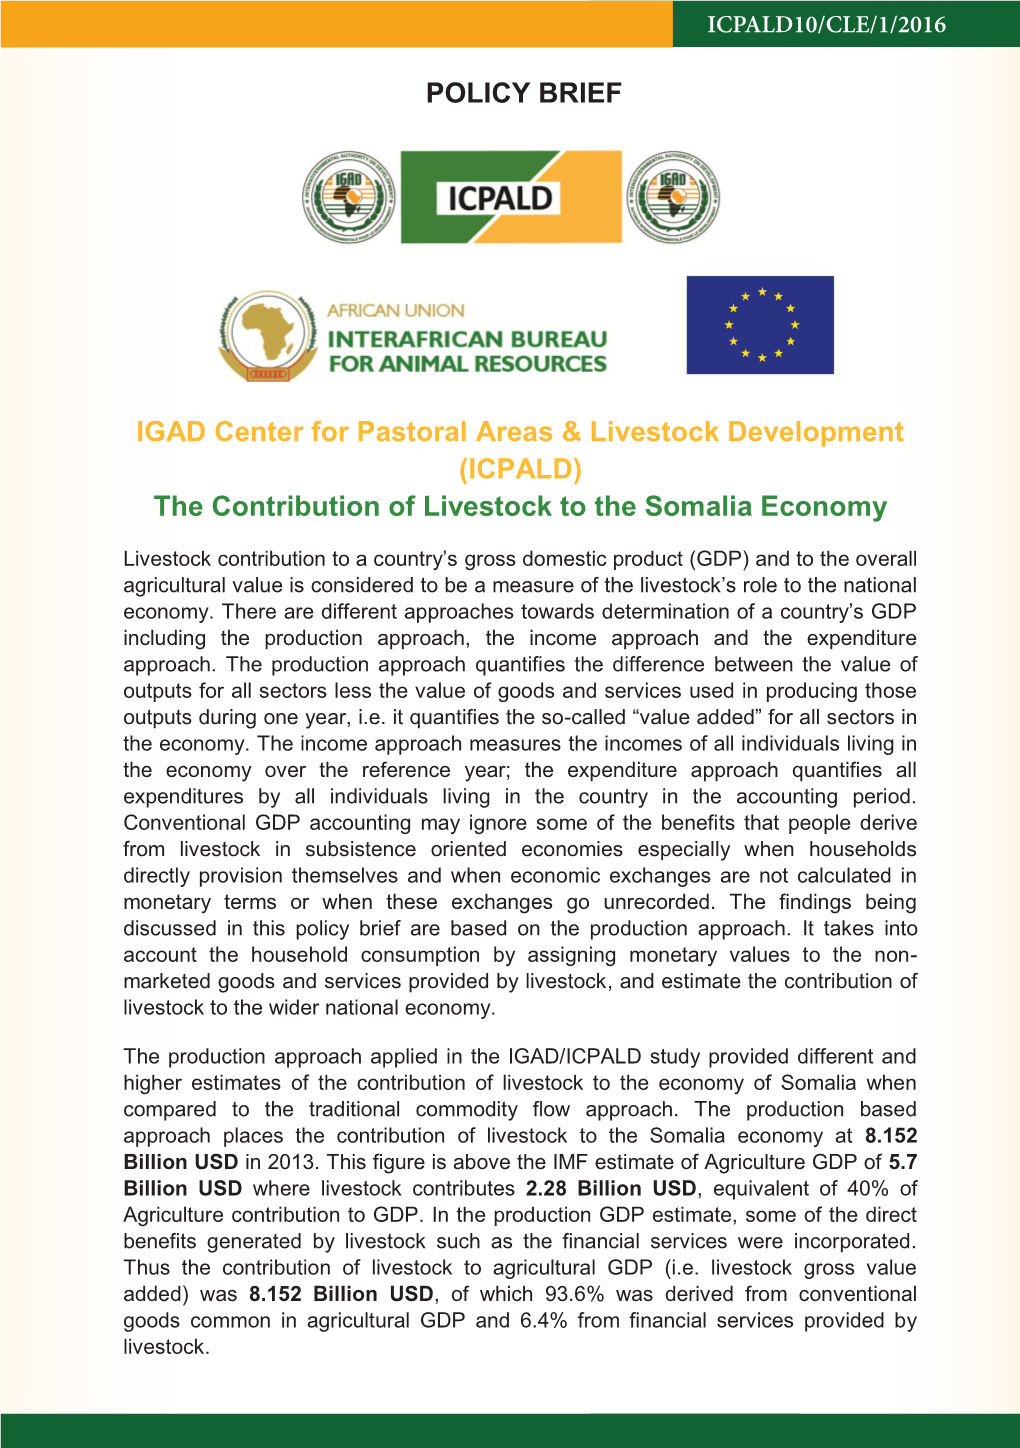 (ICPALD) the Contribution of Livestock to the Somalia Economy